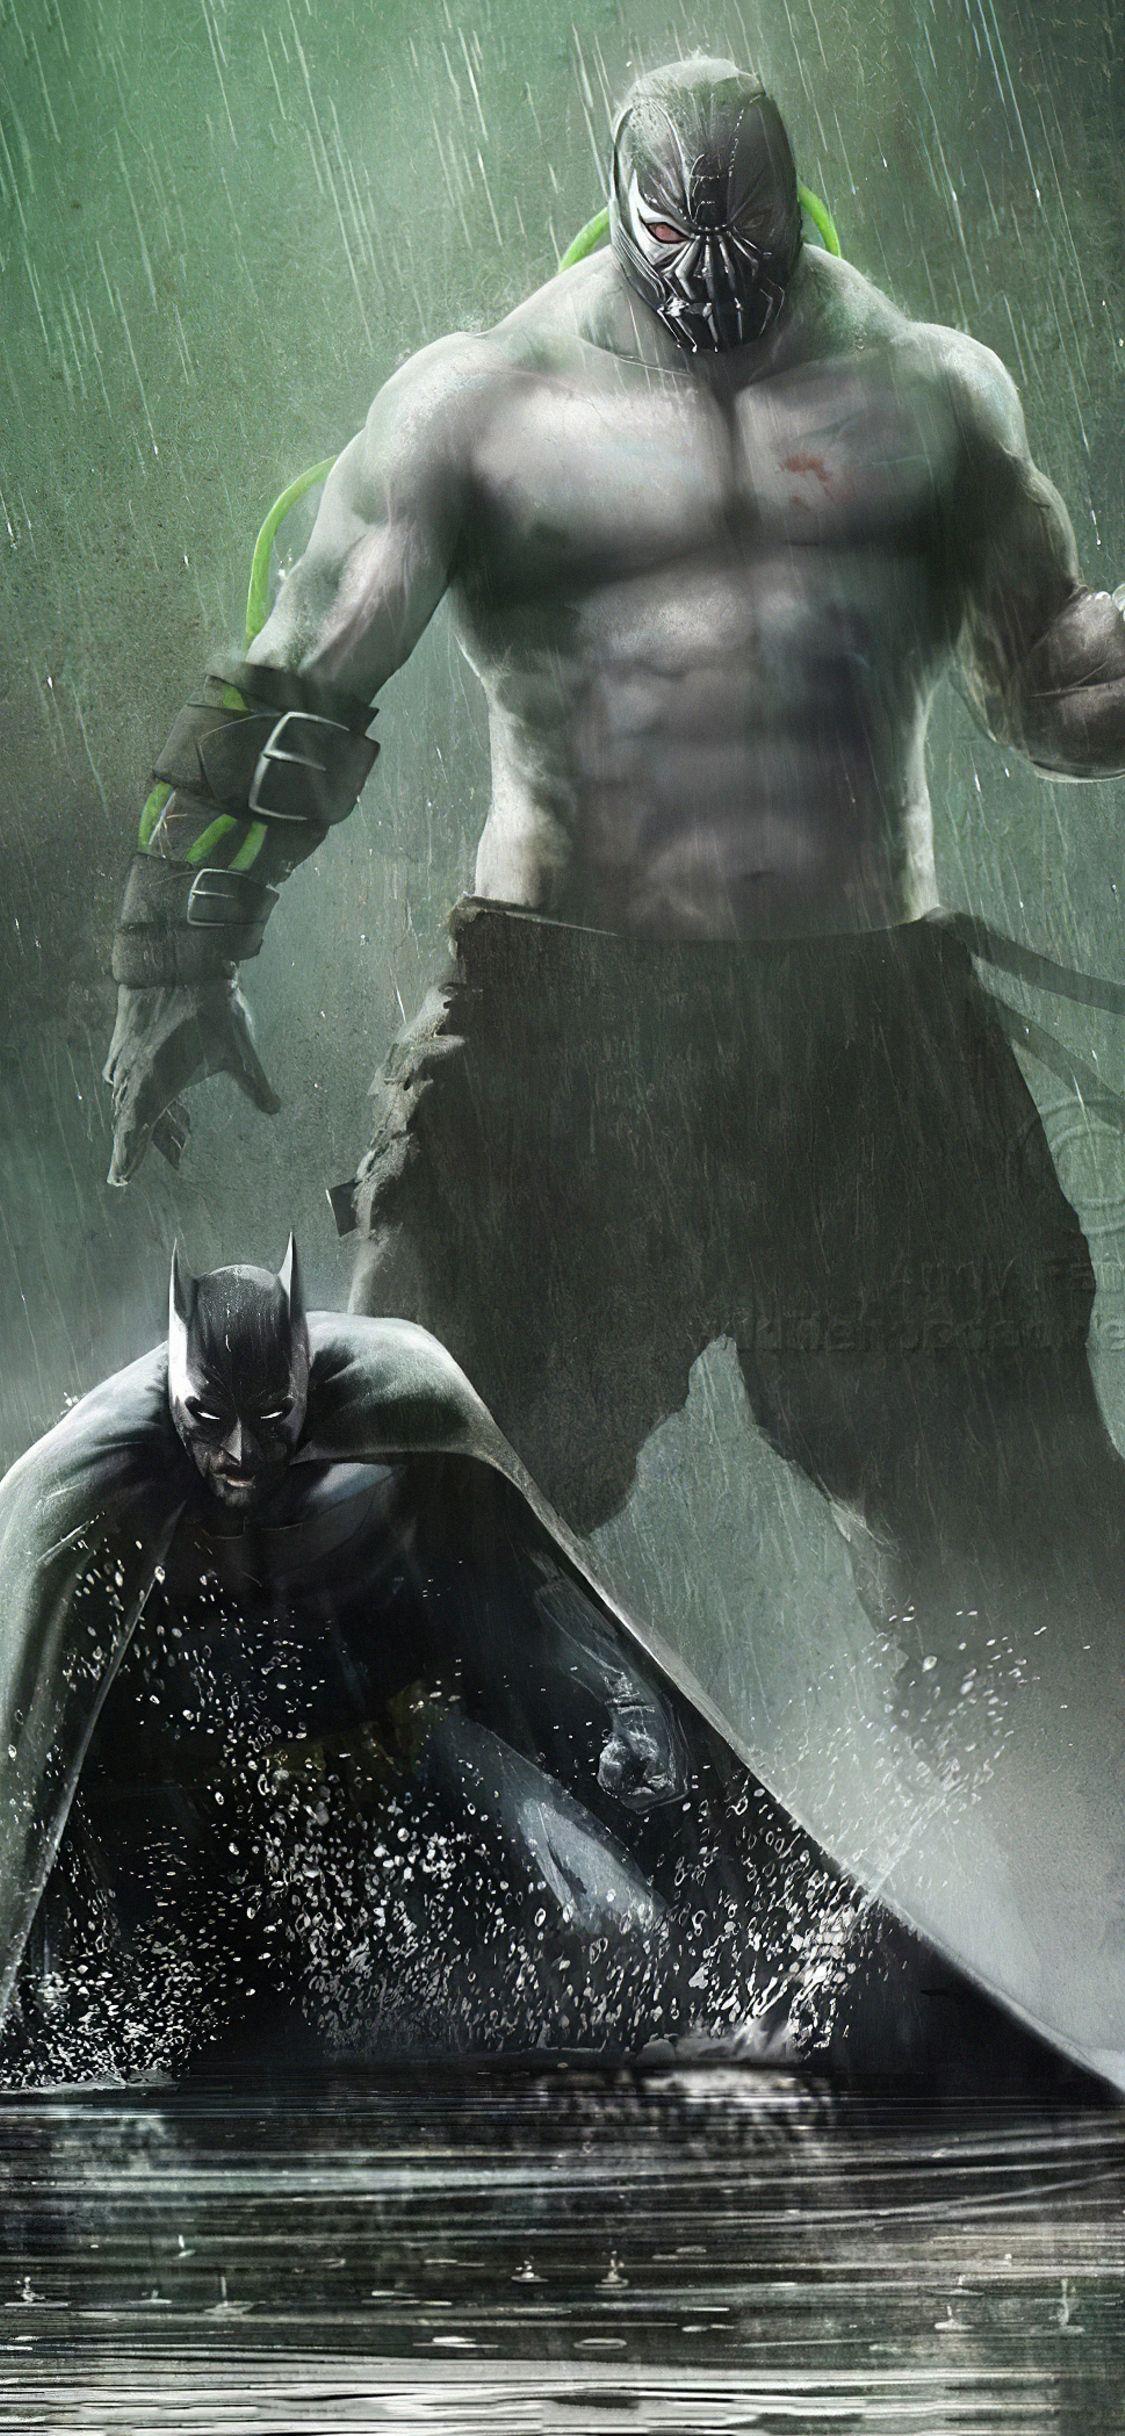 The Dark Knight Rises Bane 640 x 960 iPhone 4 Wallpaper